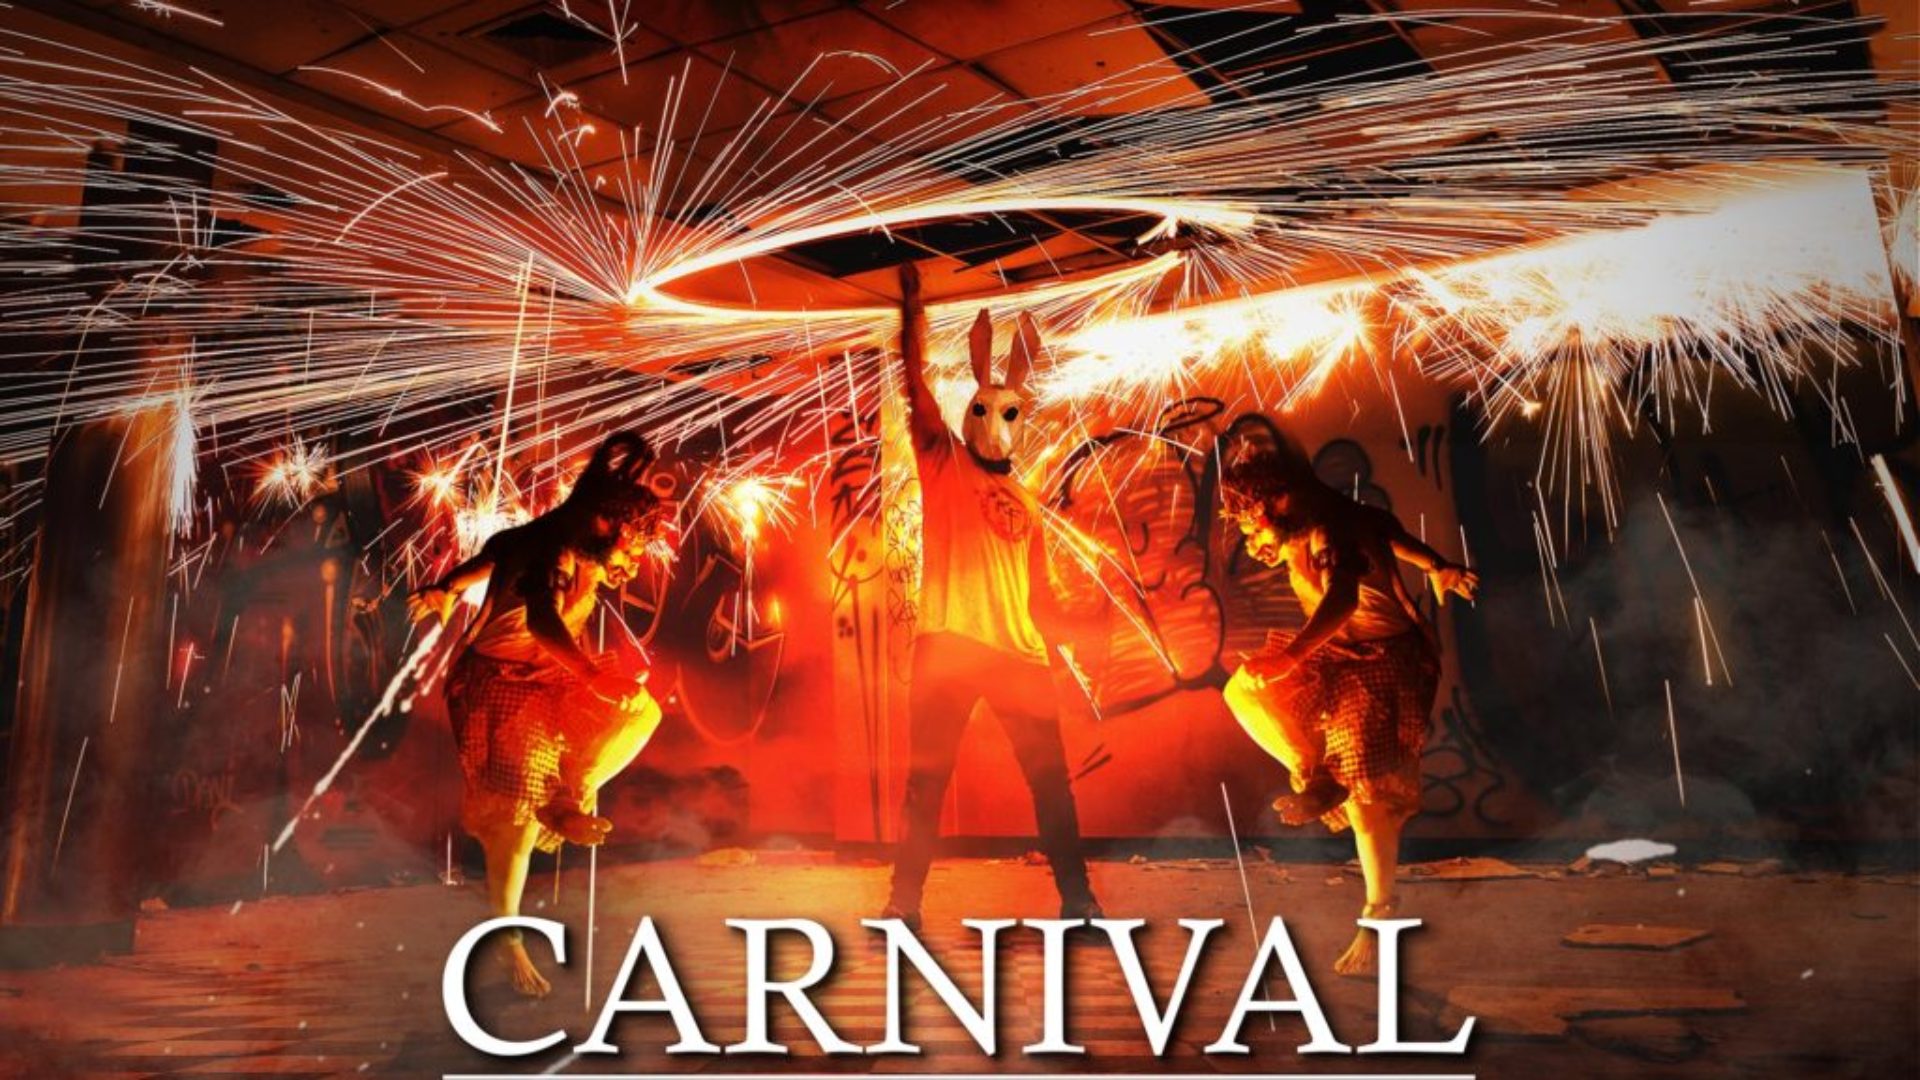 Carnival-of-Animals-Artwork-BassRebels